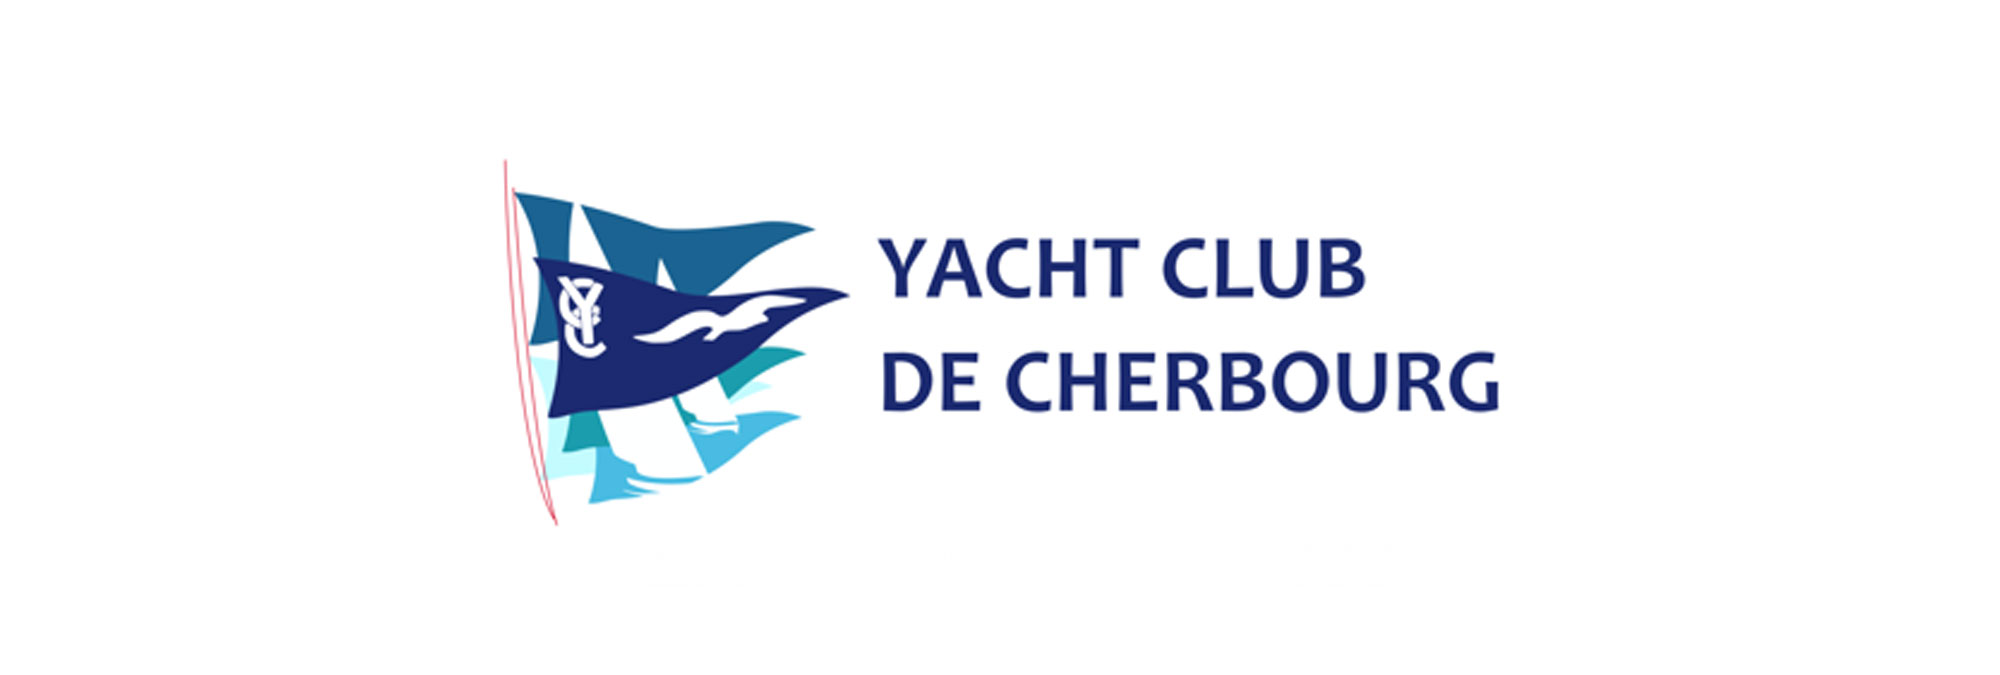 logo Yacht club de cherbourg